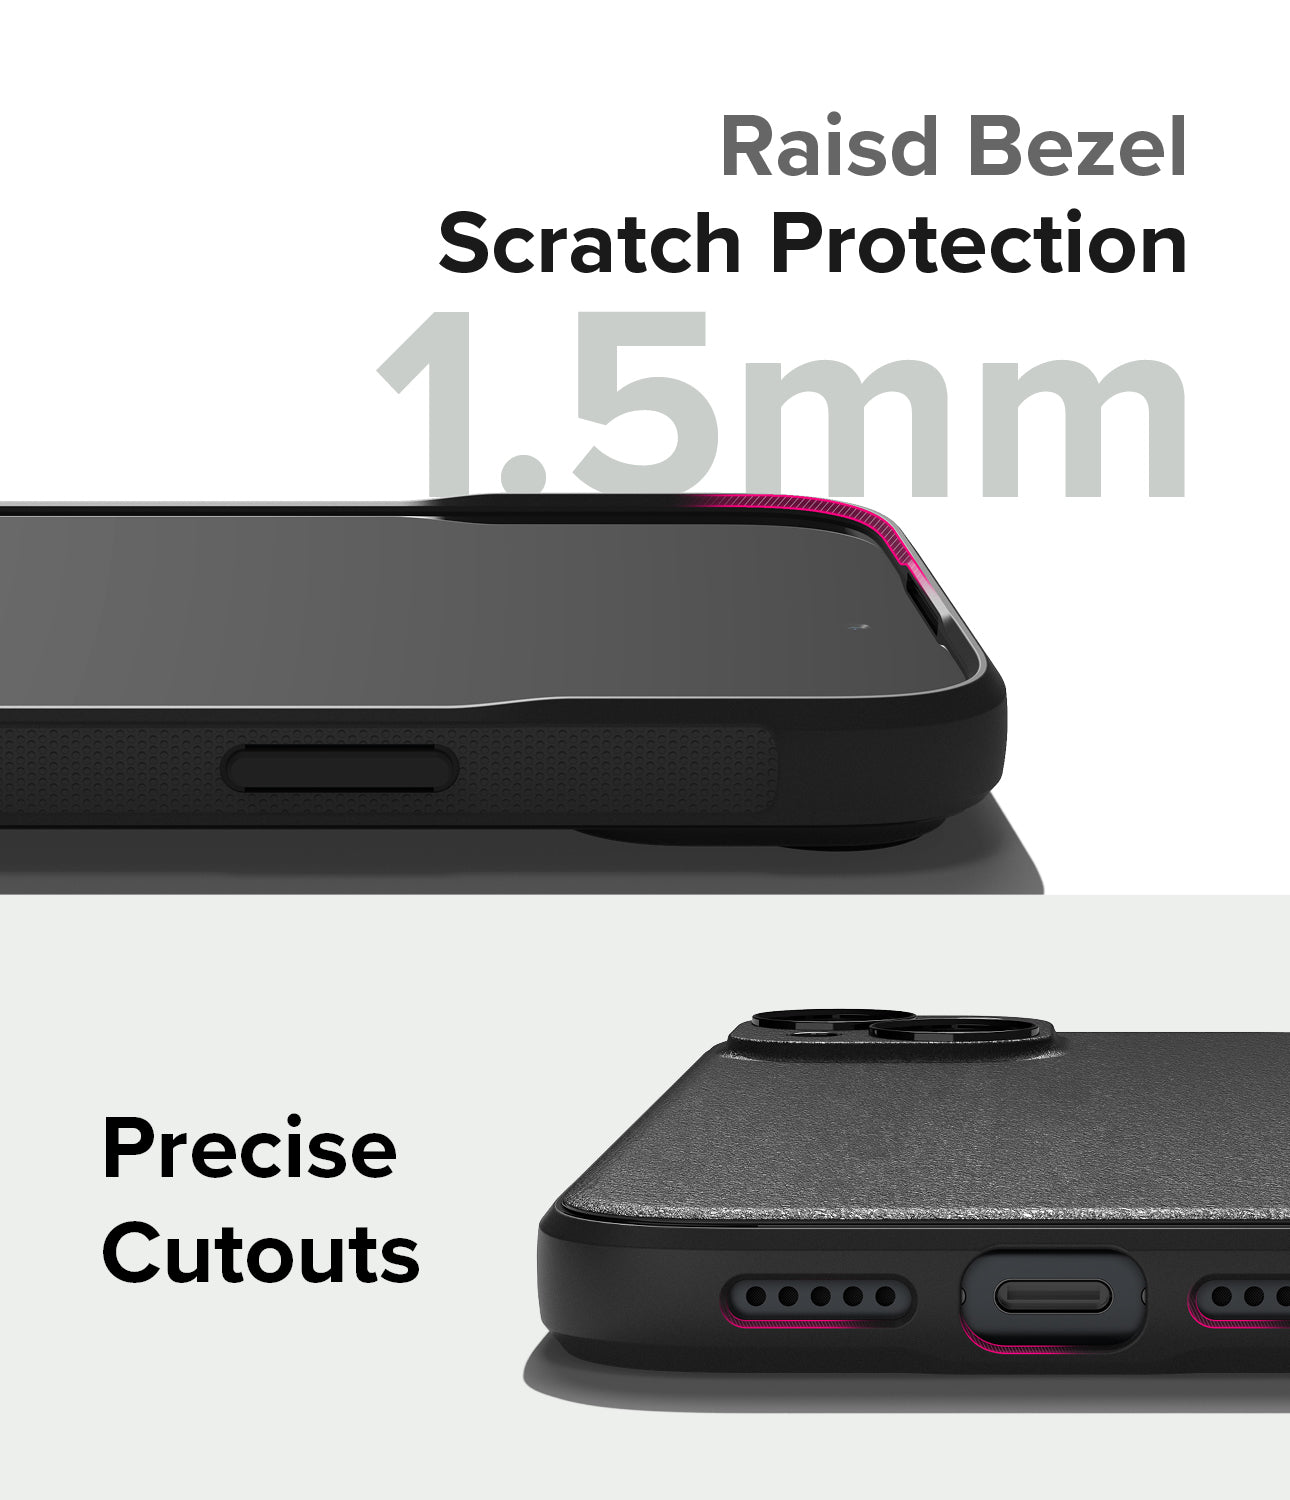 Phone Case : iPhone 15 Plus Otterbox Defender Case Adapter